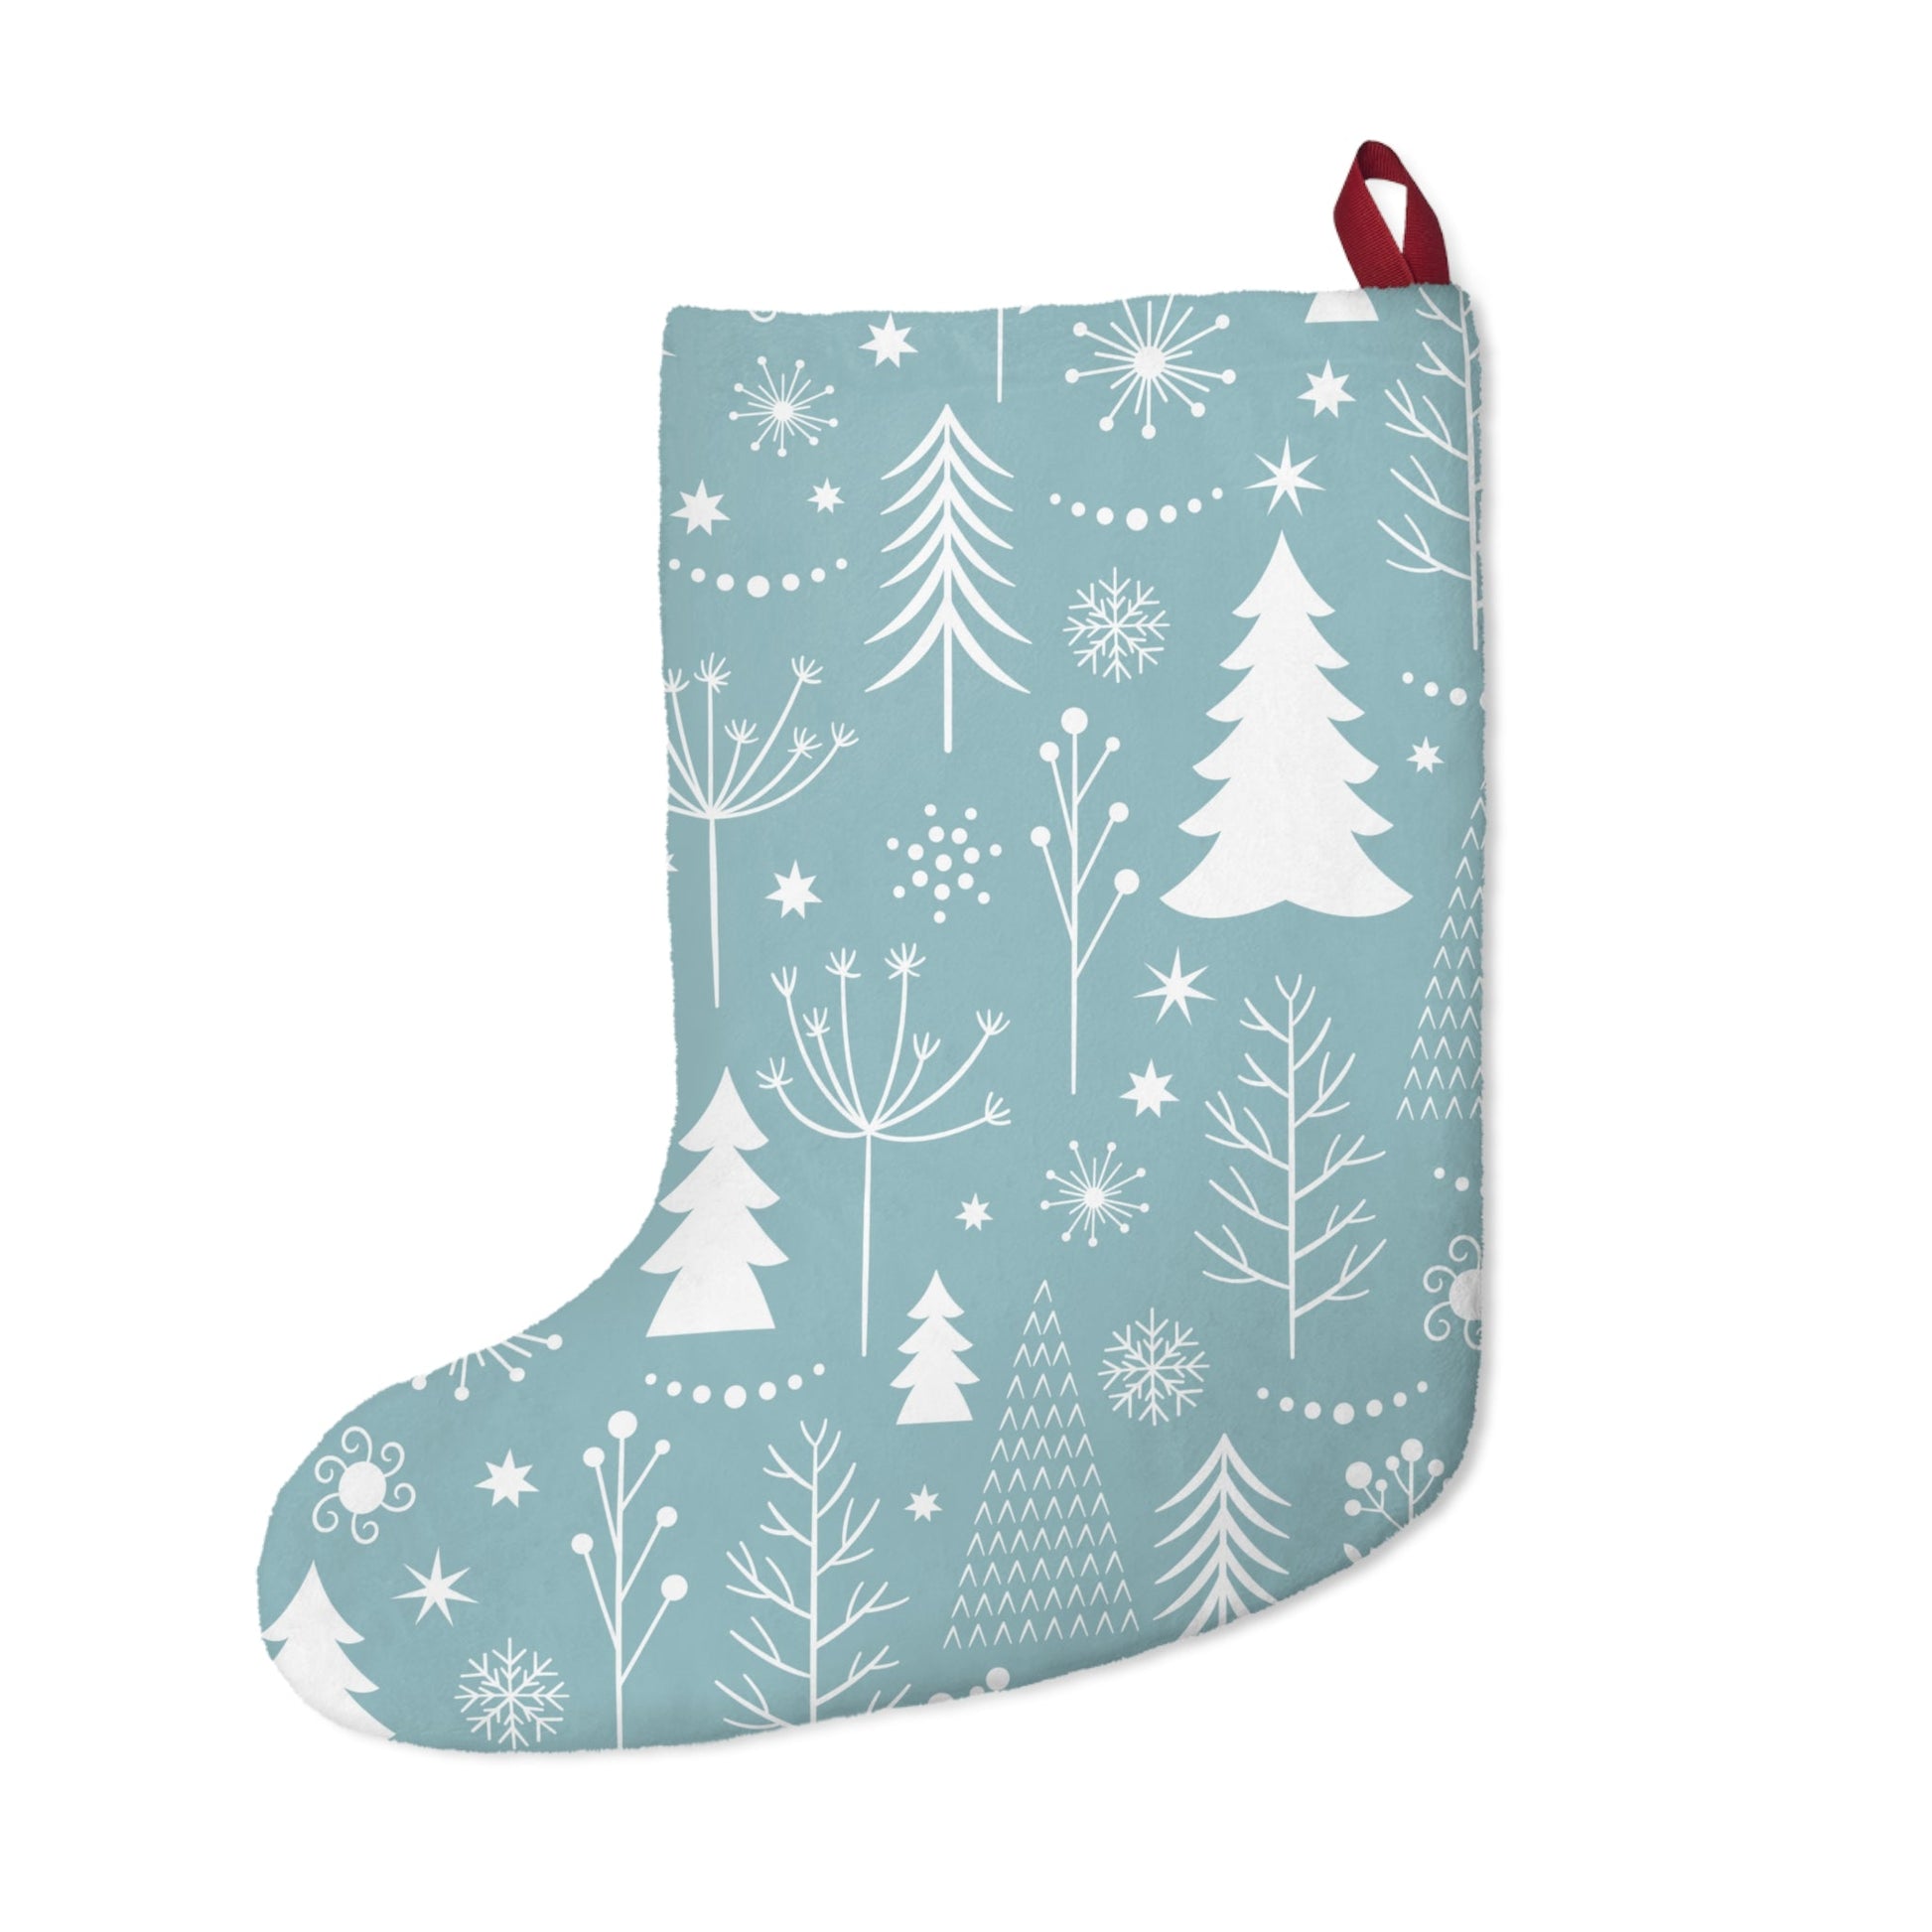 Home Decor - Snowy Vibe Christmas Stockings